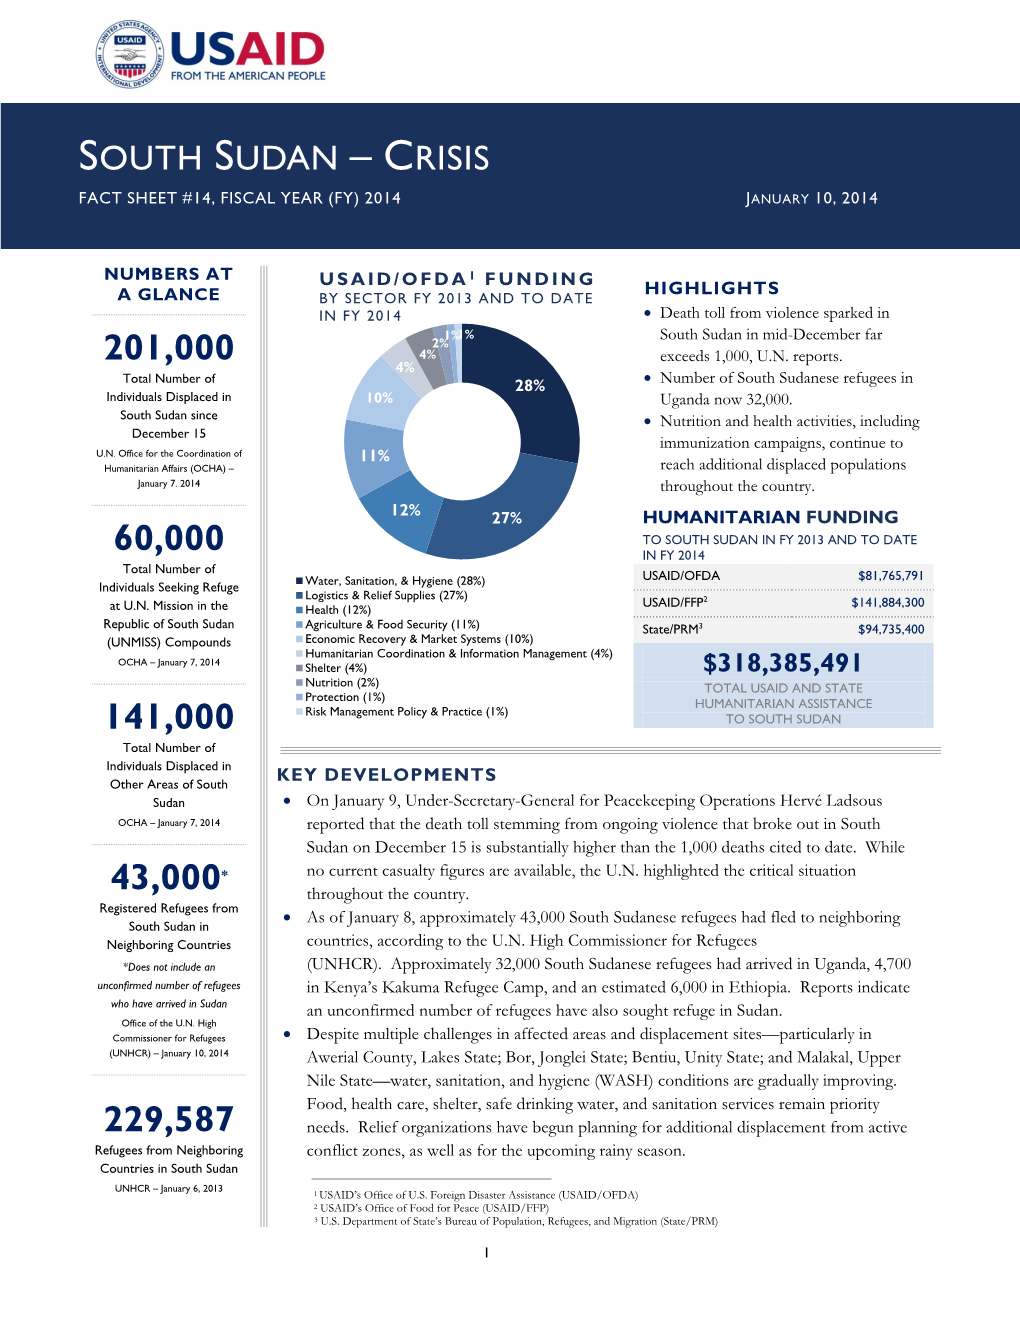 South Sudan Crisis Fact Sheet #14 January 10, 2014